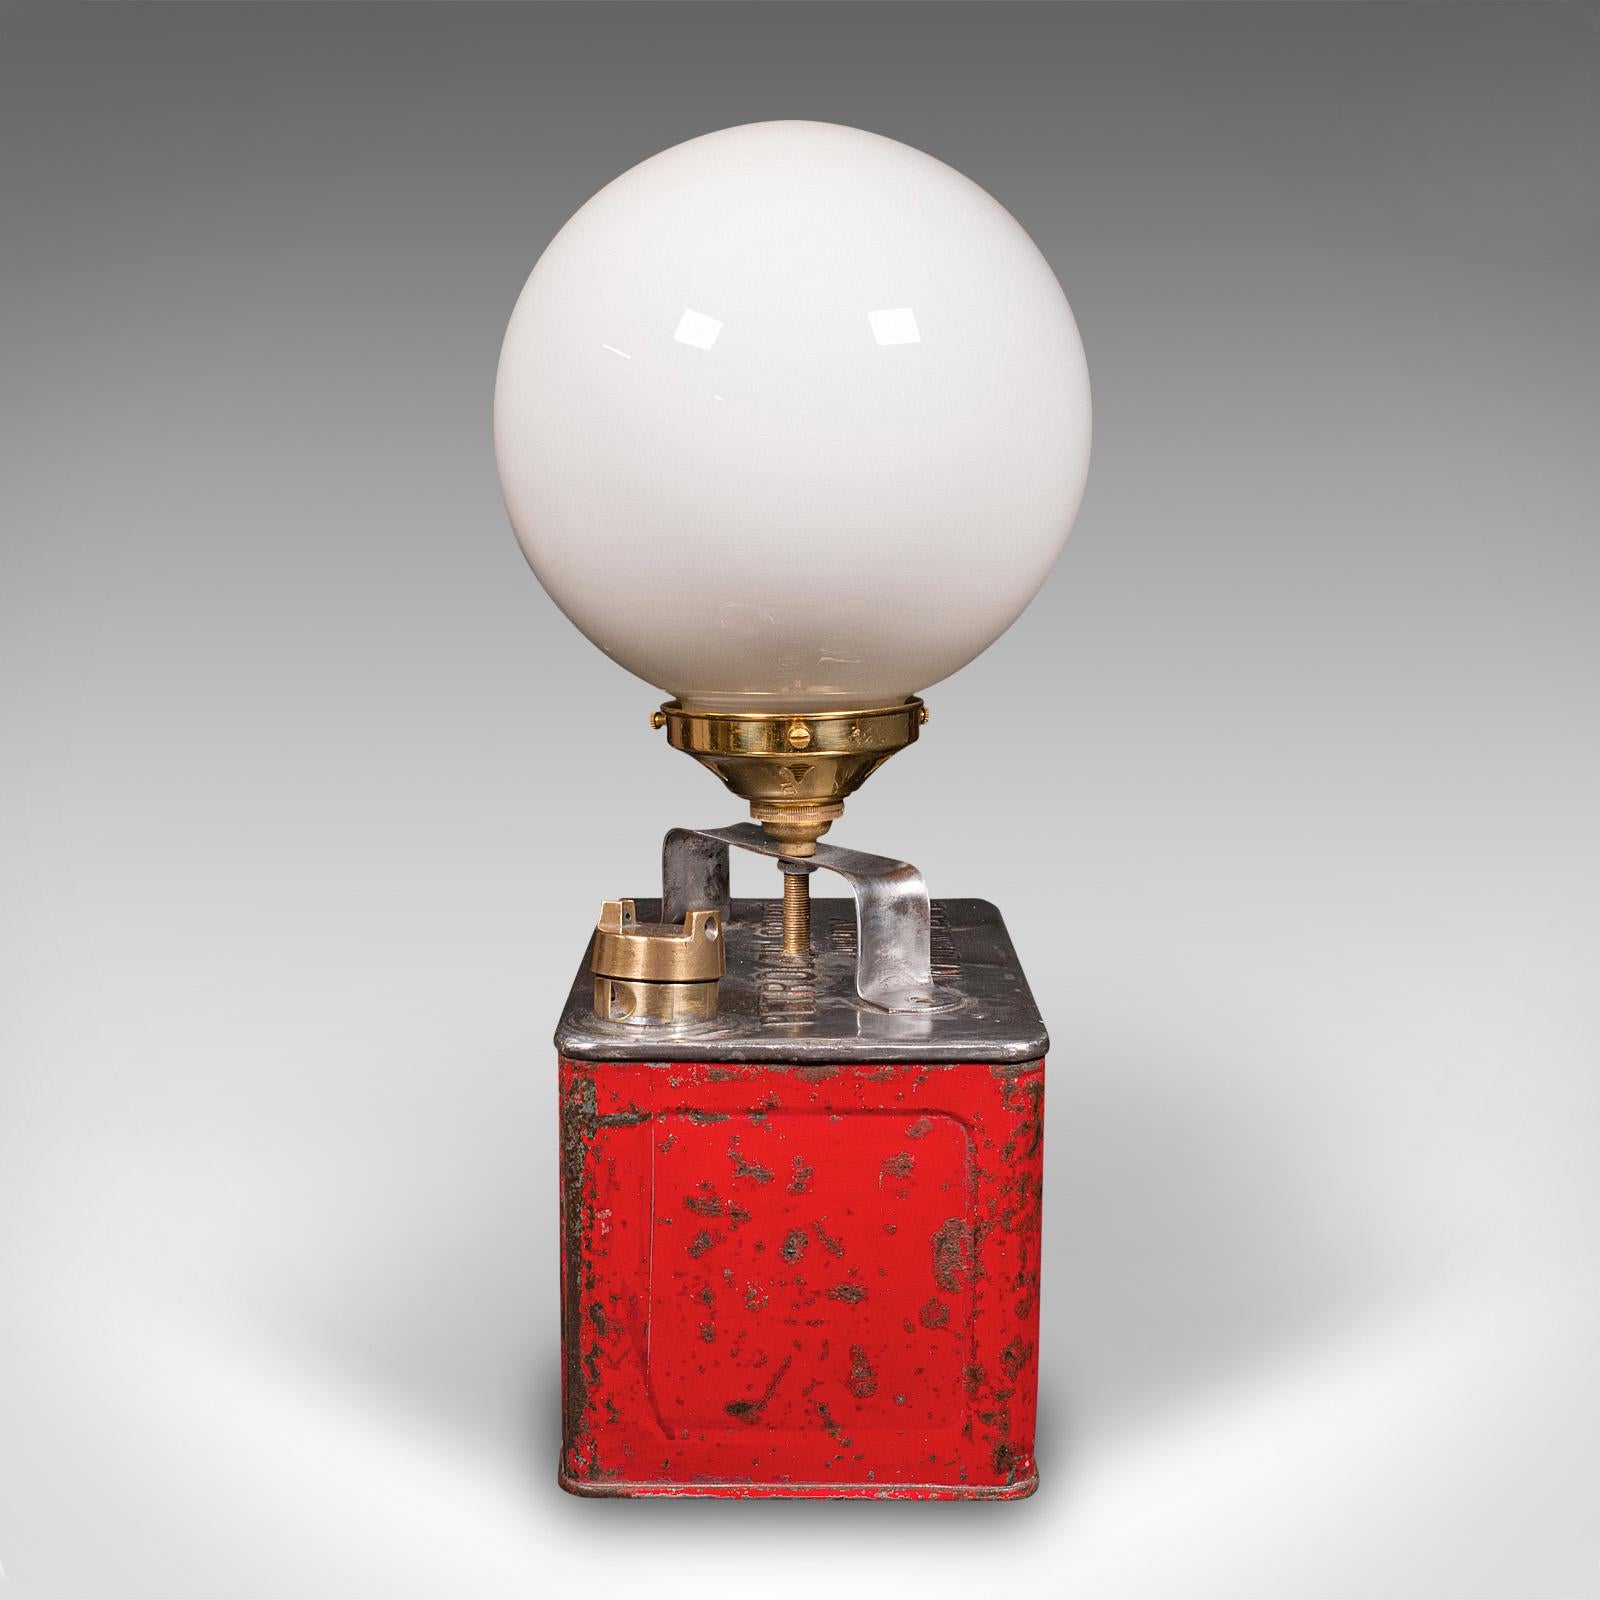 British Vintage Converted Petrol Can Lamp, Automobilia, Decorative, Accent Light, C.1950 For Sale